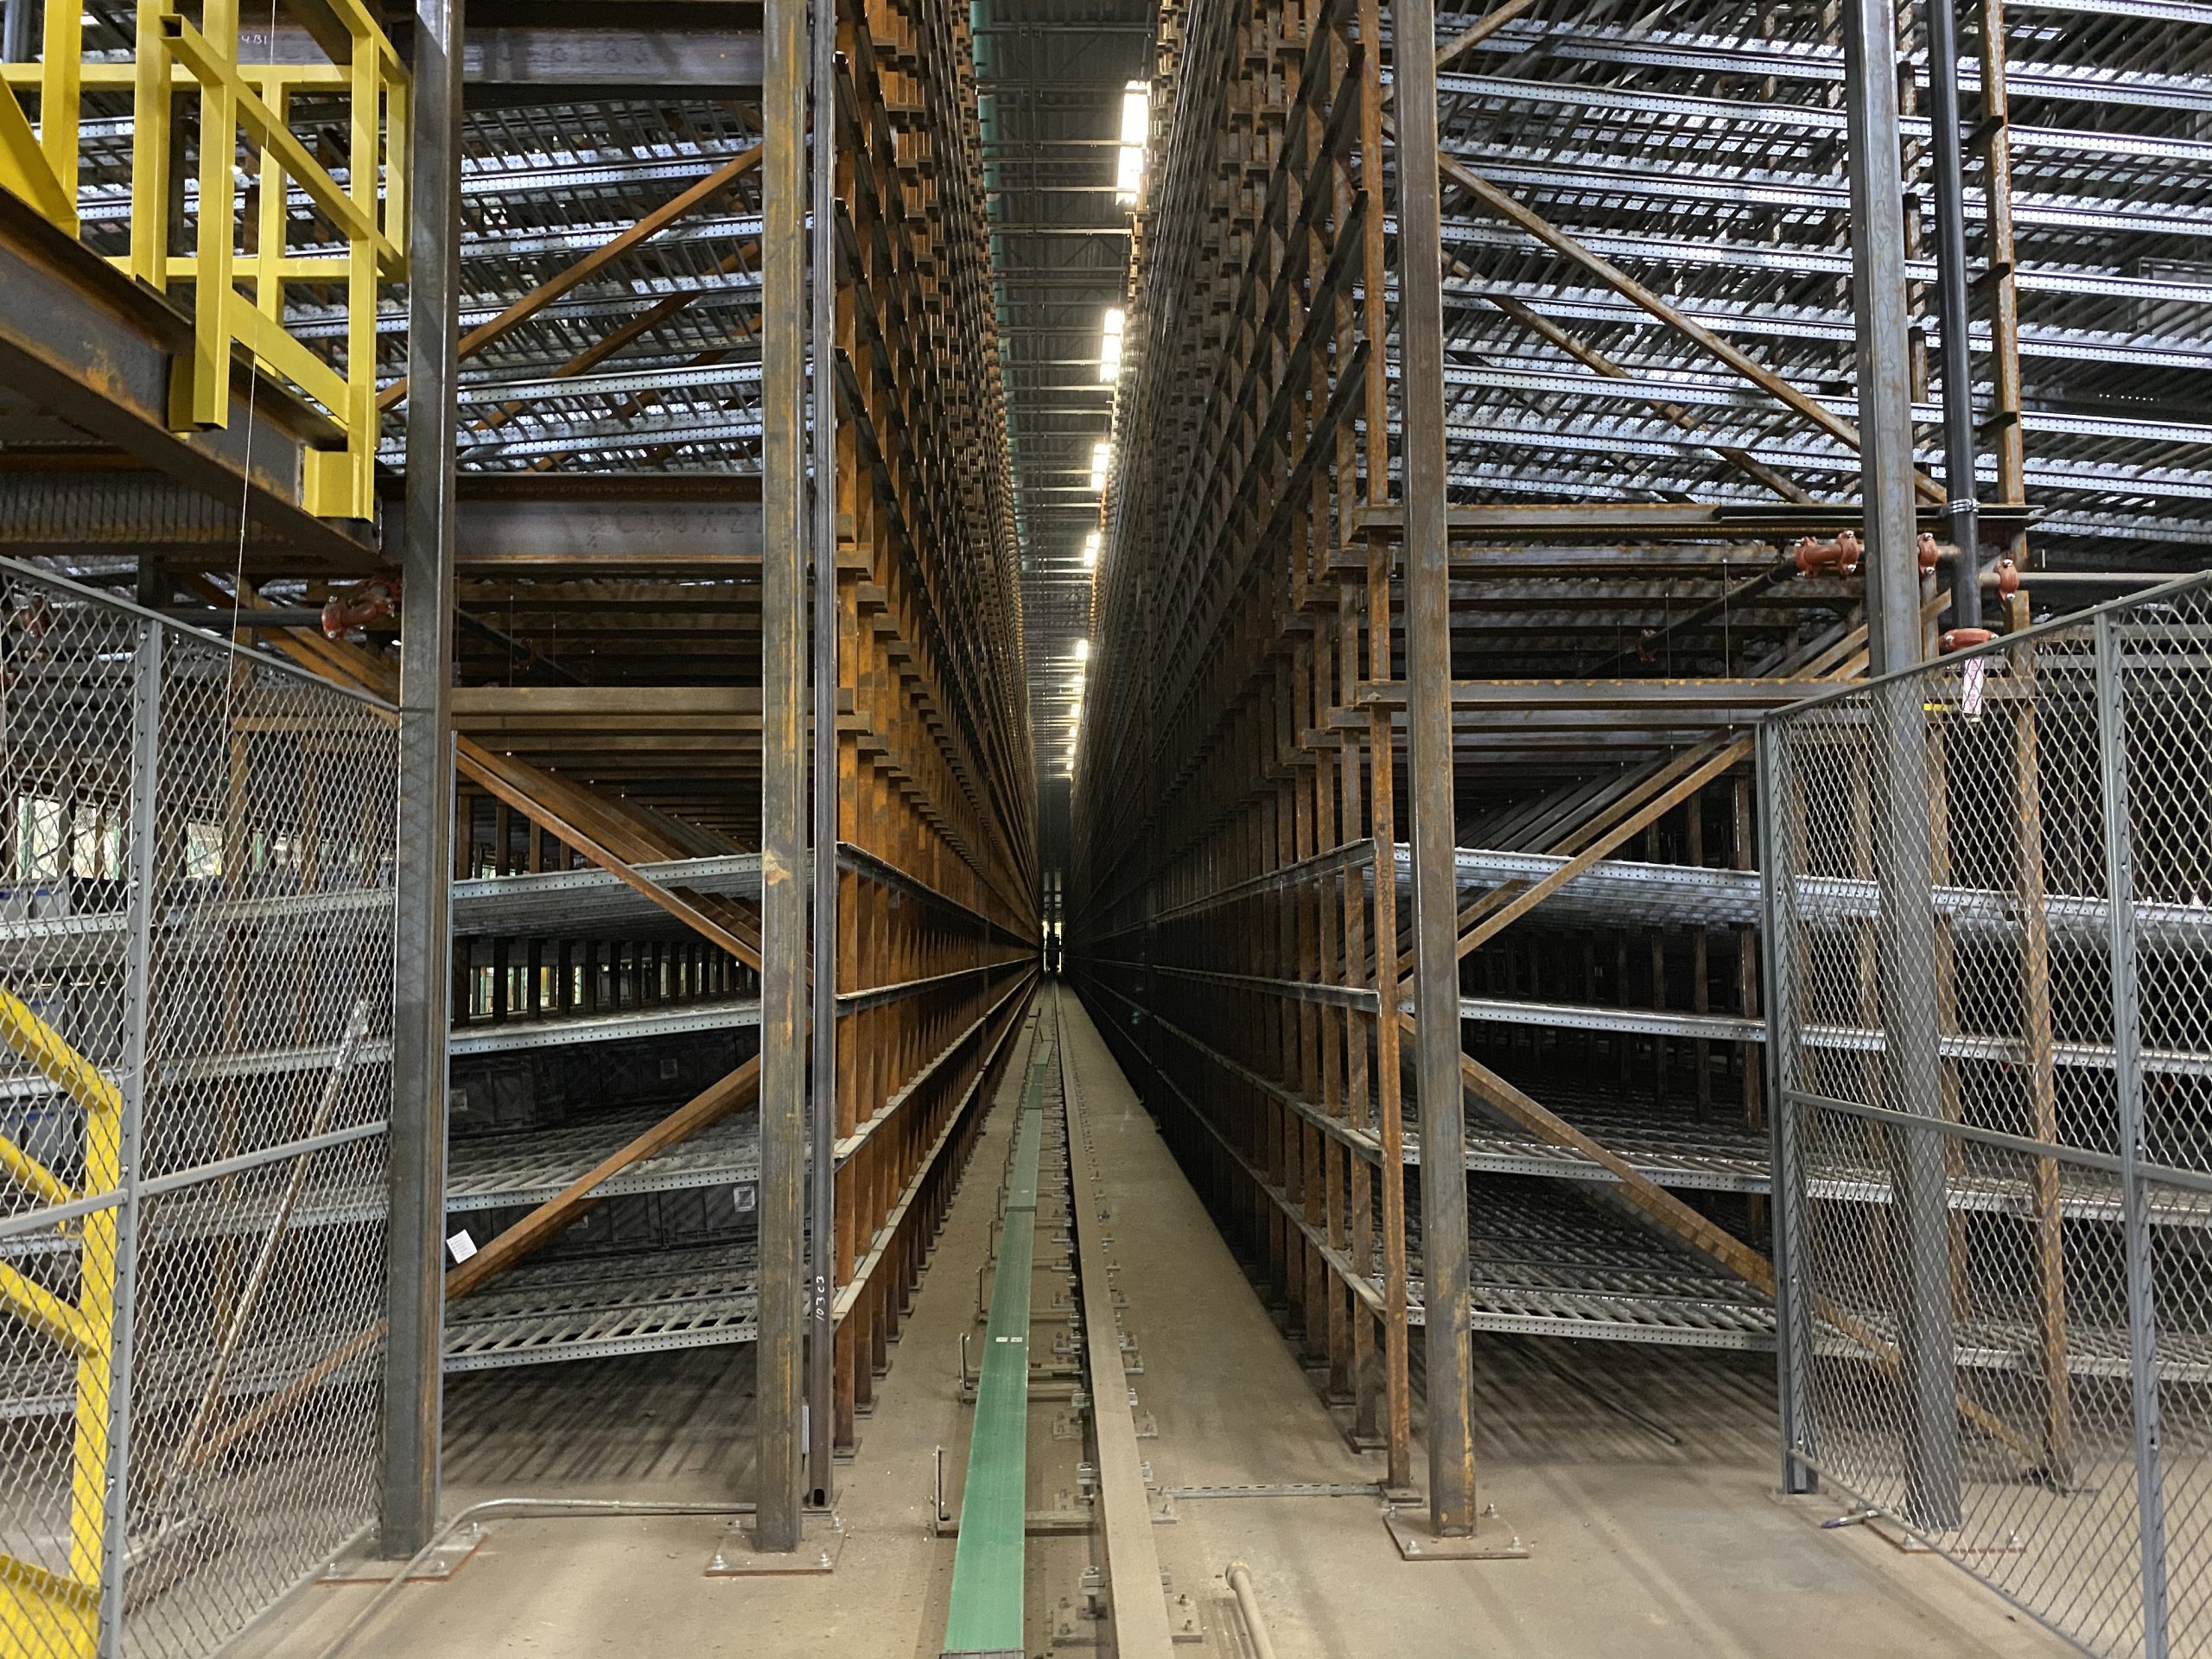 Internal Automated Storage and Retrieval Systems